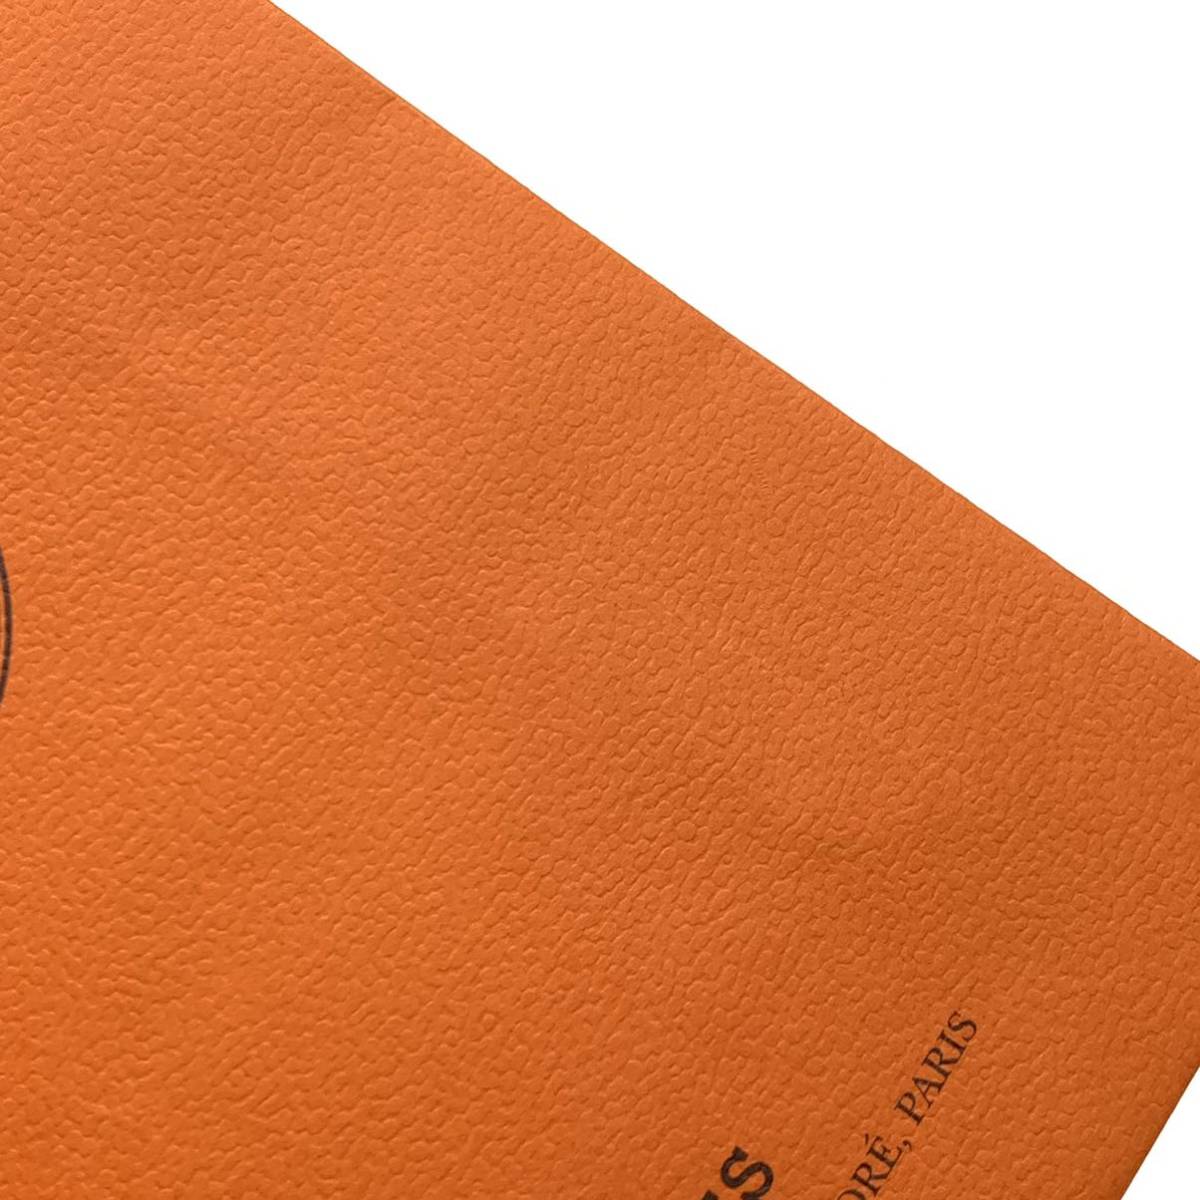 HERMES エルメス 紙袋 ショップ袋 ショッパー ブランド紙袋 オレンジ ラッピング 10枚セット 15×21.5×7cm 付属品 管理RY4_画像6